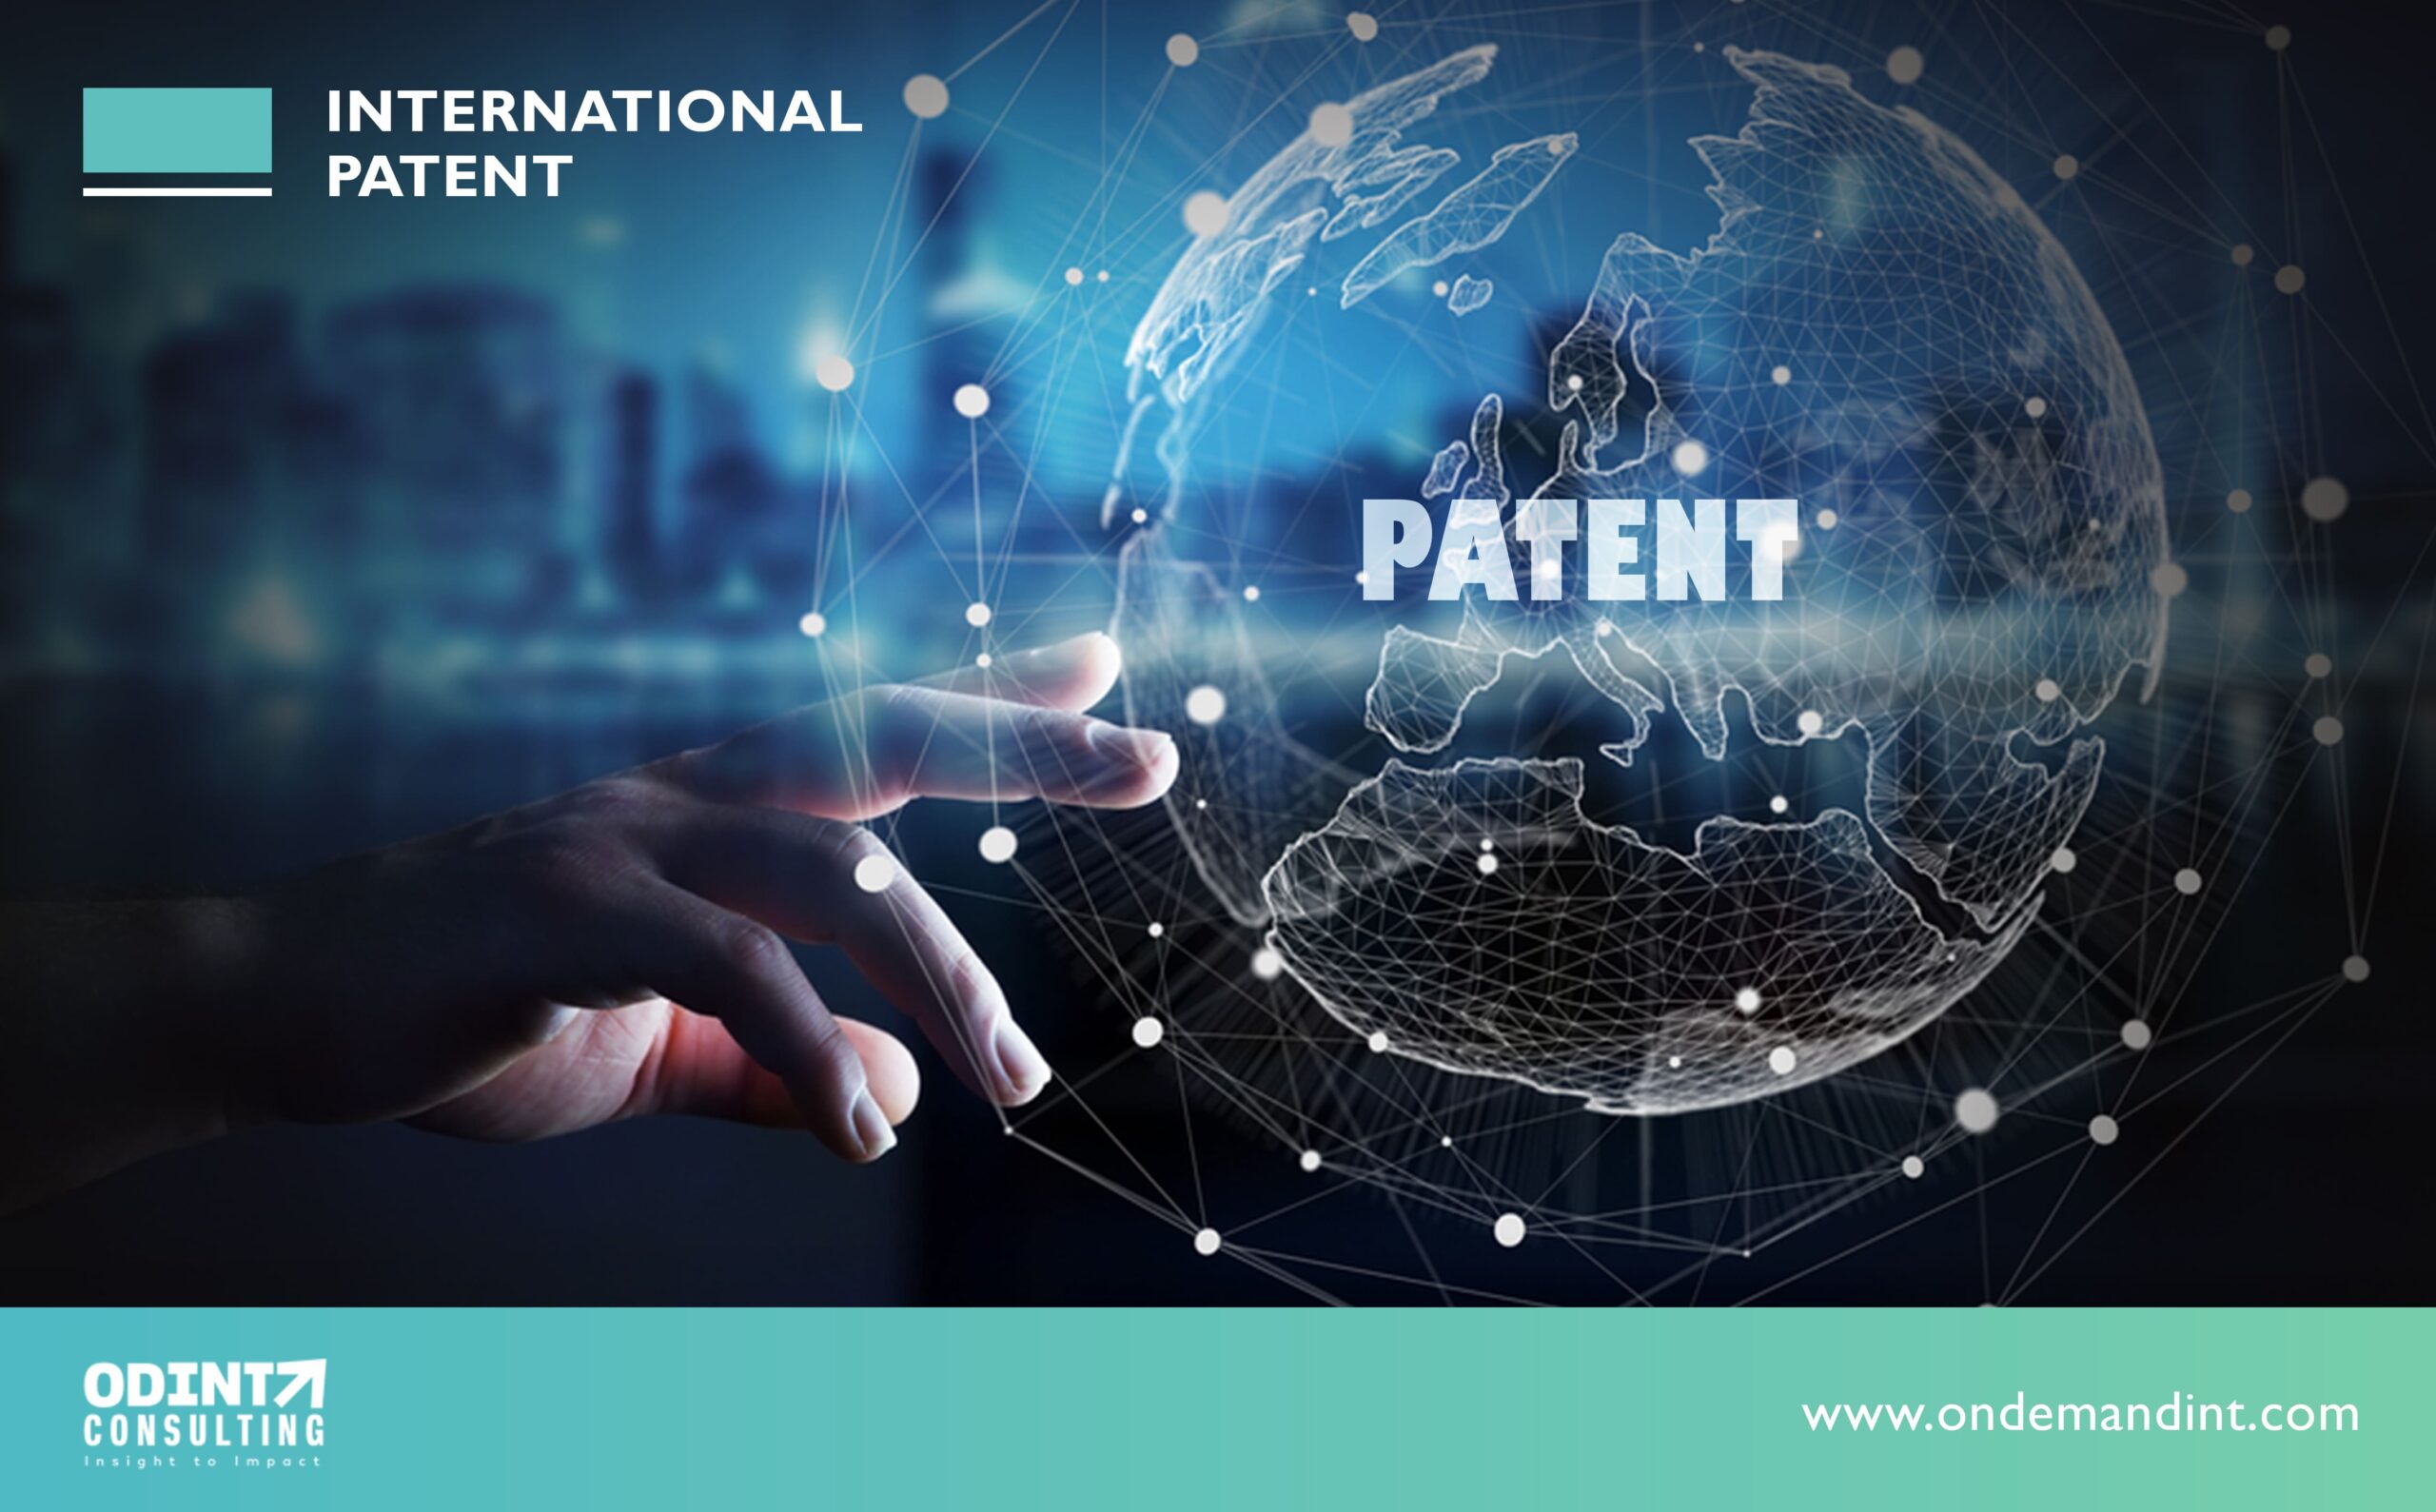 International Patent: Patent Cooperation Treaty & Application Time